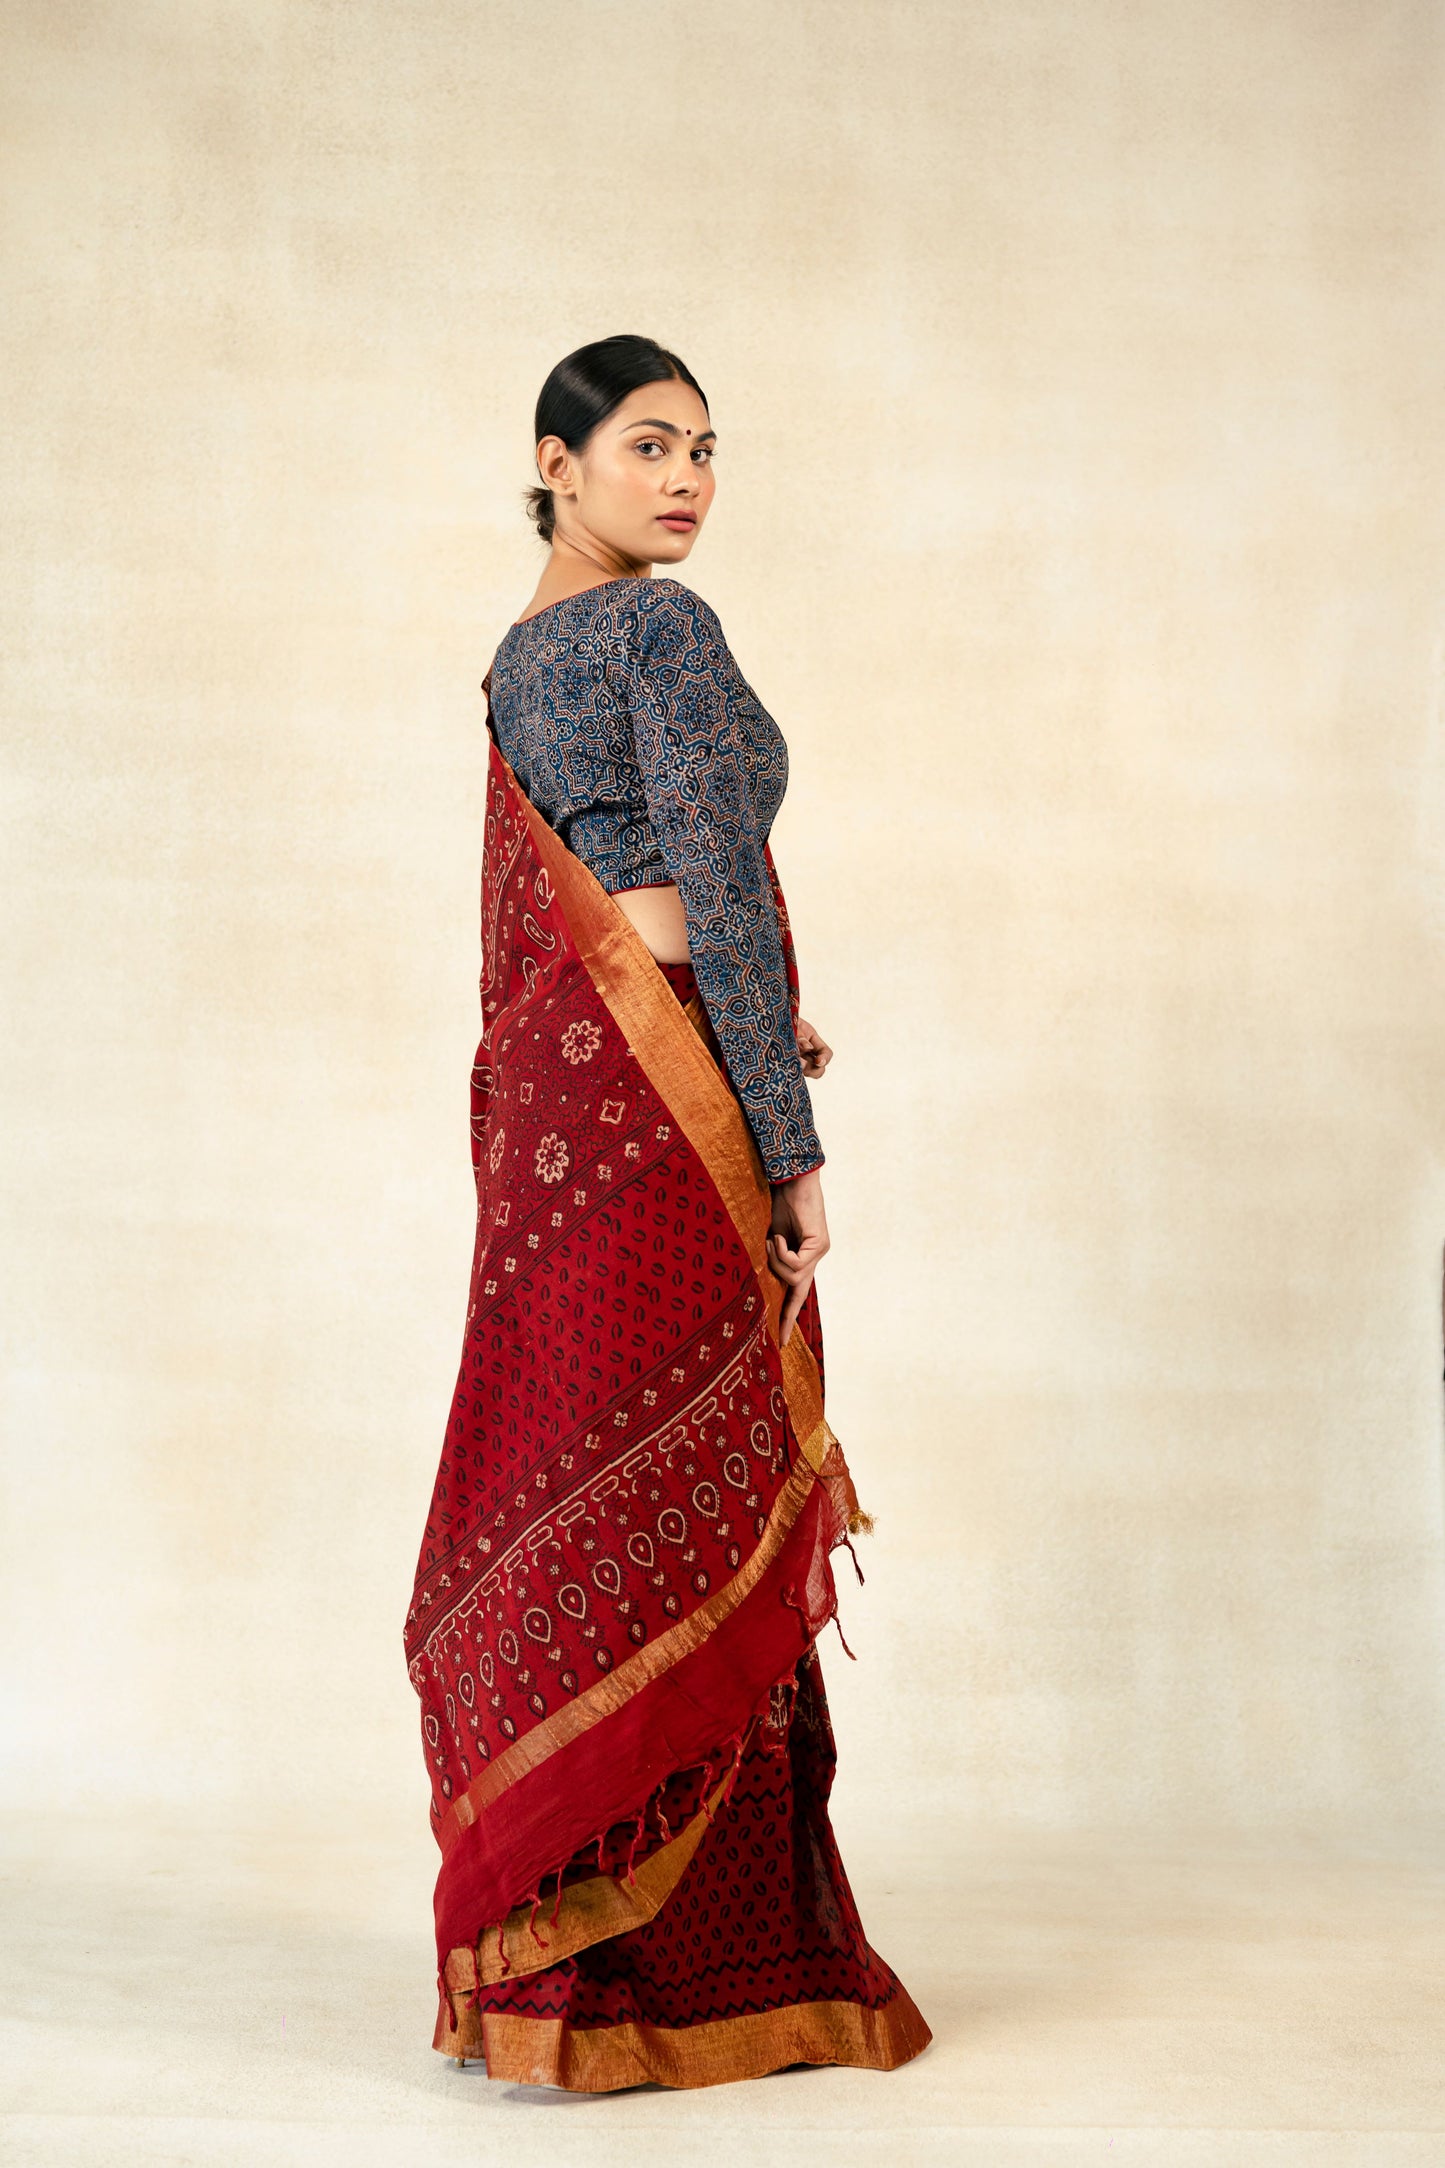 Madder red ajrakh prints linen saree, Ajrakh hand block print cotton linen saree in madder red color, Saree blouse